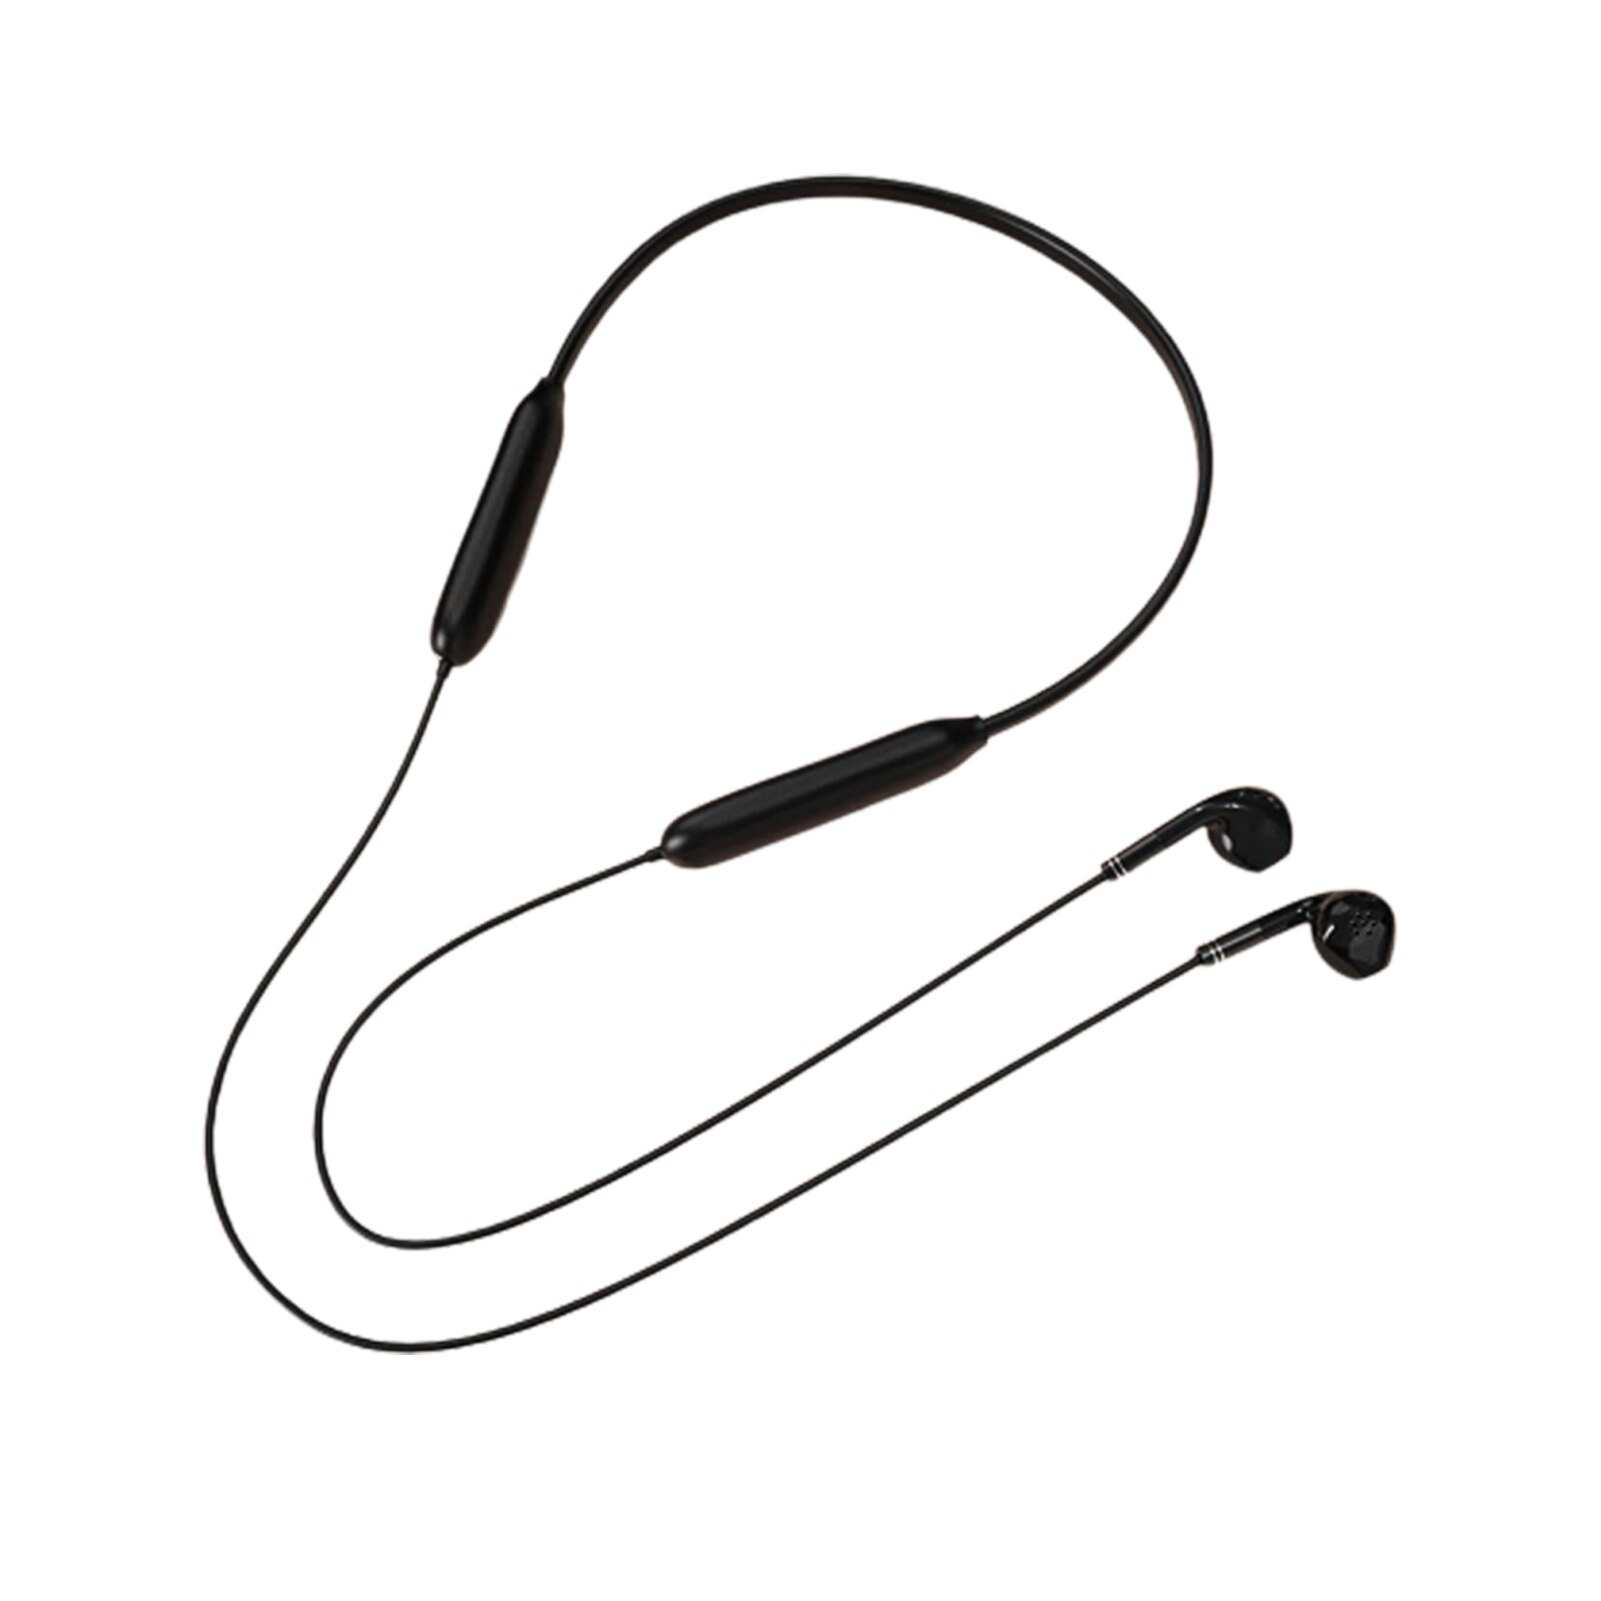 Neckband Bluetooth Earphone Wireless Headphones Headset Sports Running Waterproof Earbuds Wireless